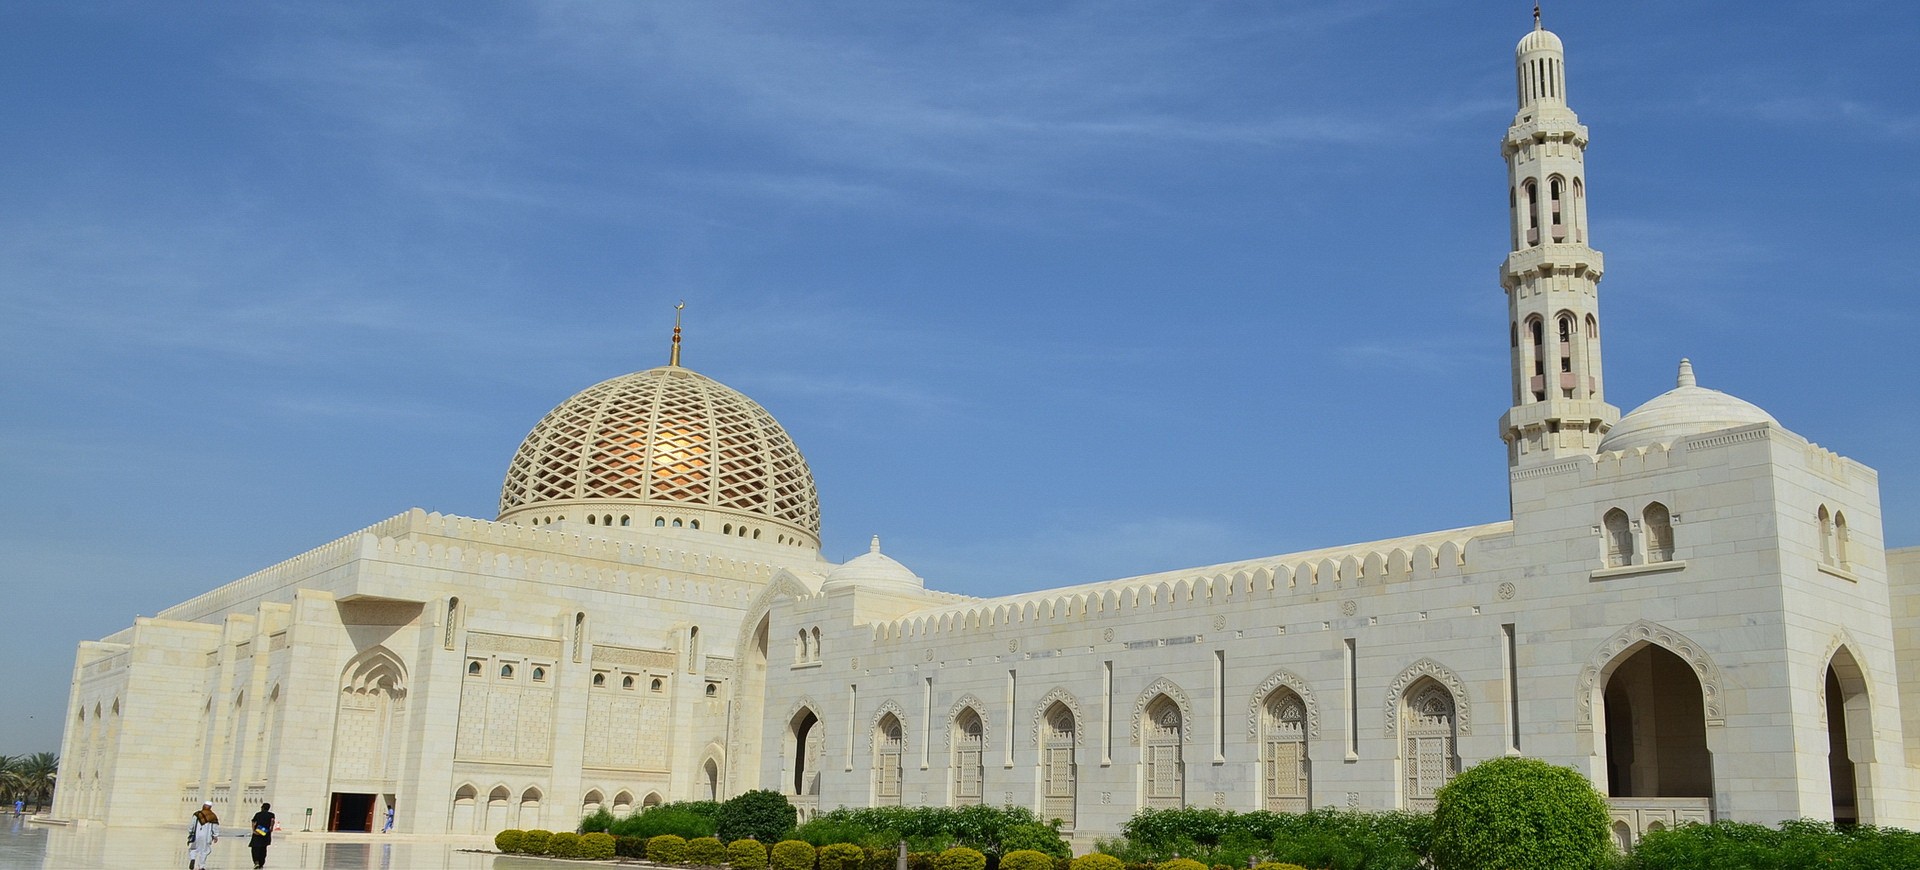 Oman Mascate Mosquée by ZB